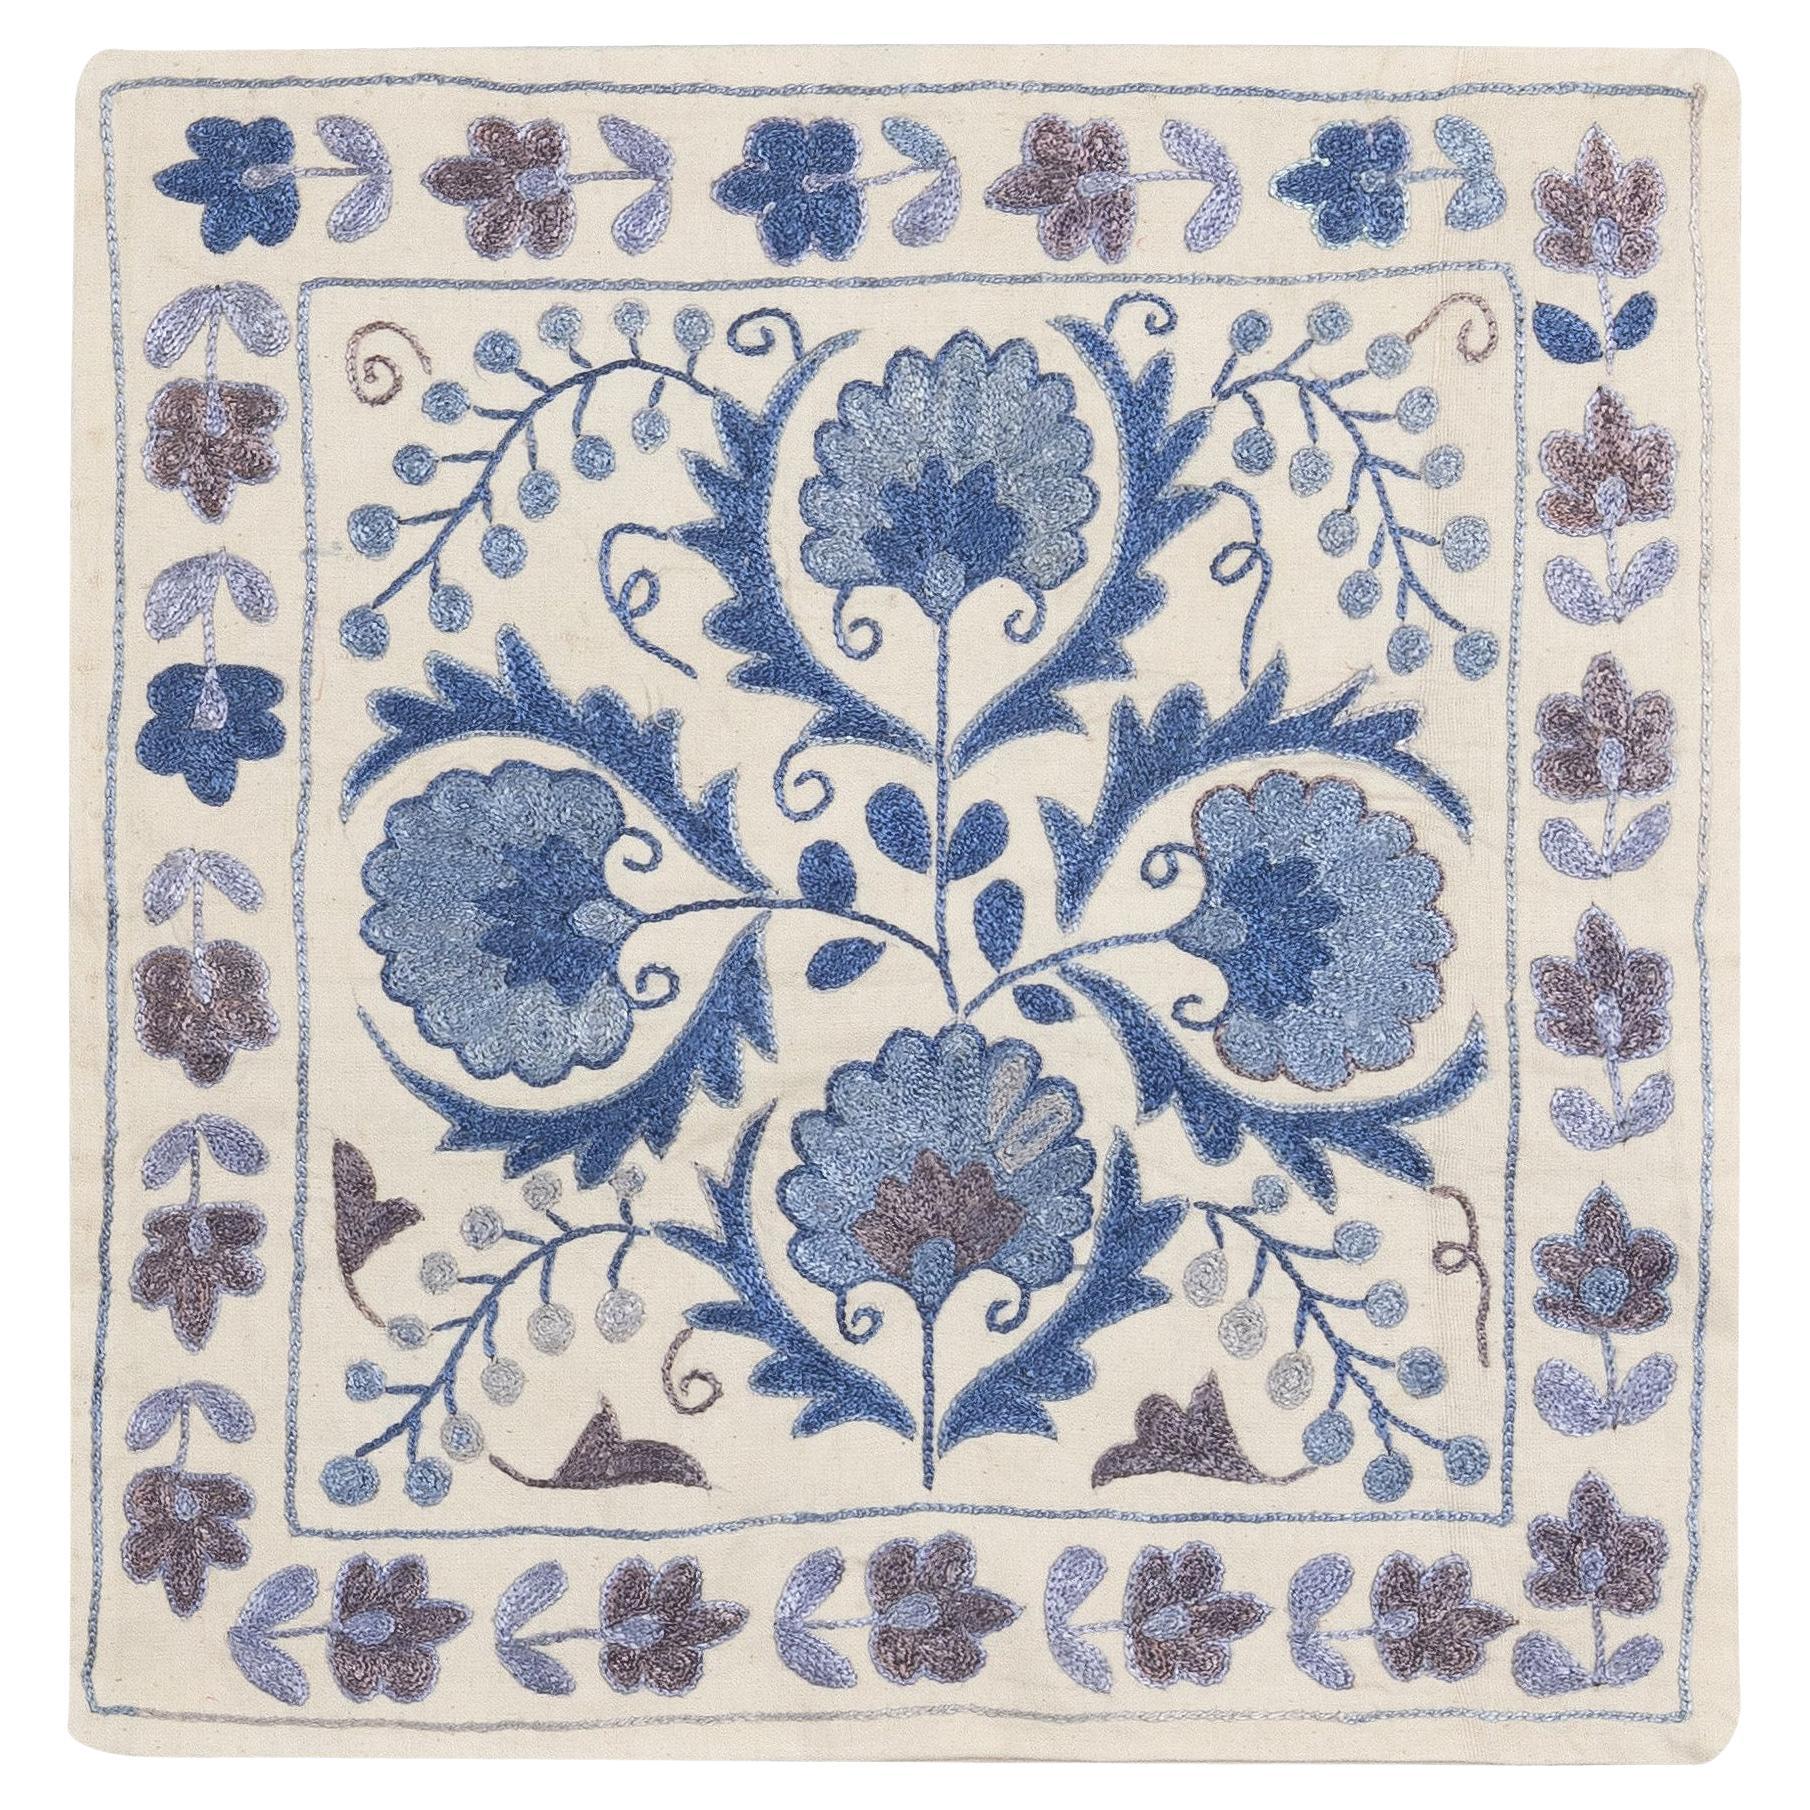 18 "x18" Handmade New Uzbek Silk Embroidered Suzani Cushion Cover in Blue & Cream en vente